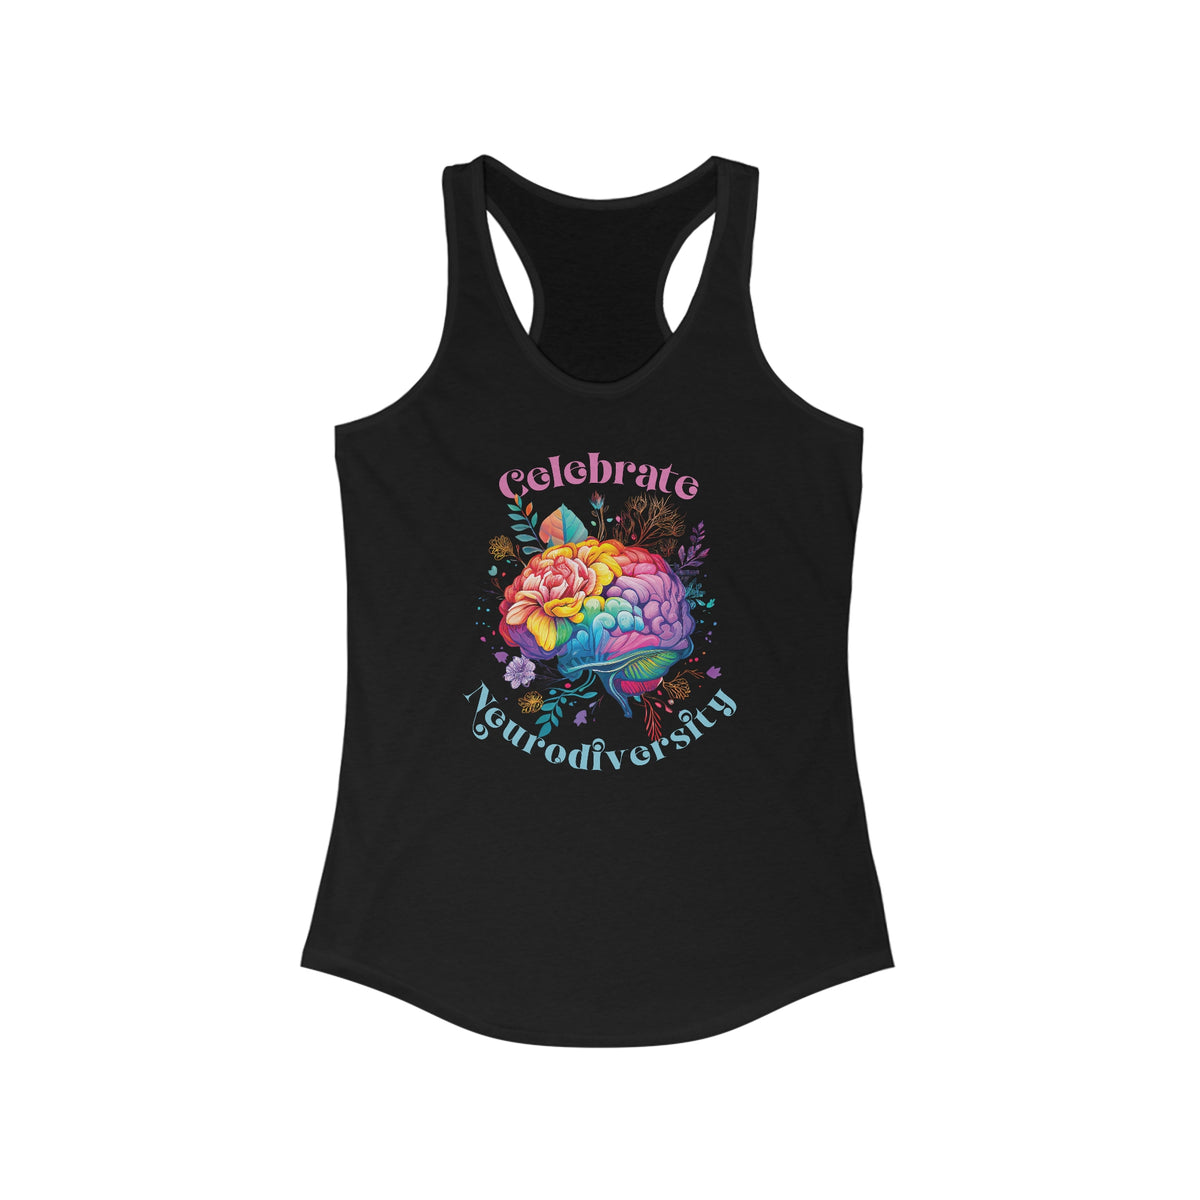 Celebrate Neurodiversity Shirt | Autism Shirt | Autism Awareness Shirt | Inclusion Shirt | Brain Art | Women's Slim Fit Racerback Tank Top